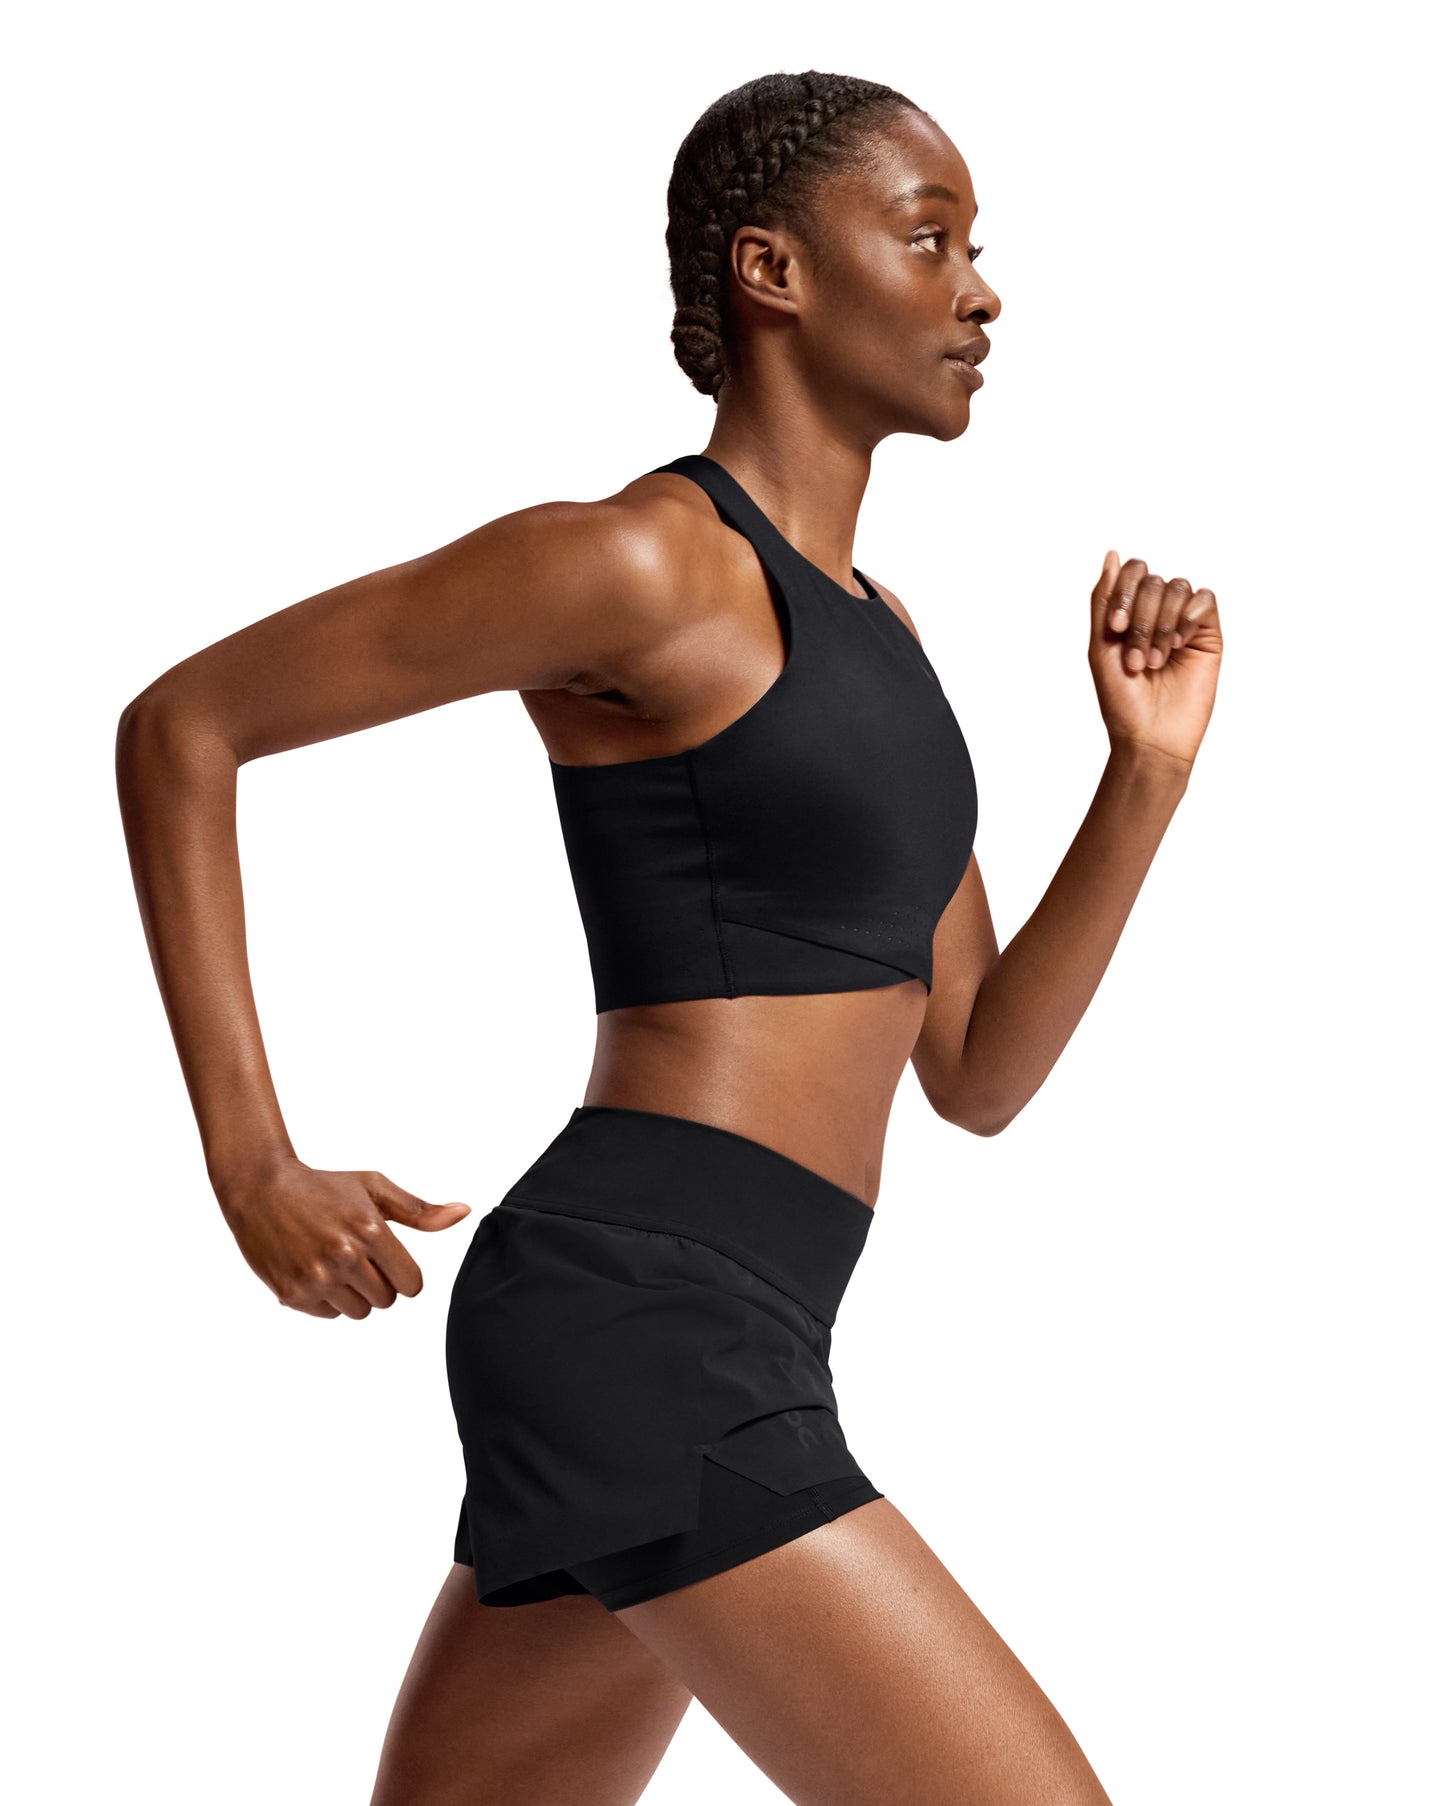 On Women's Running Shorts - Black